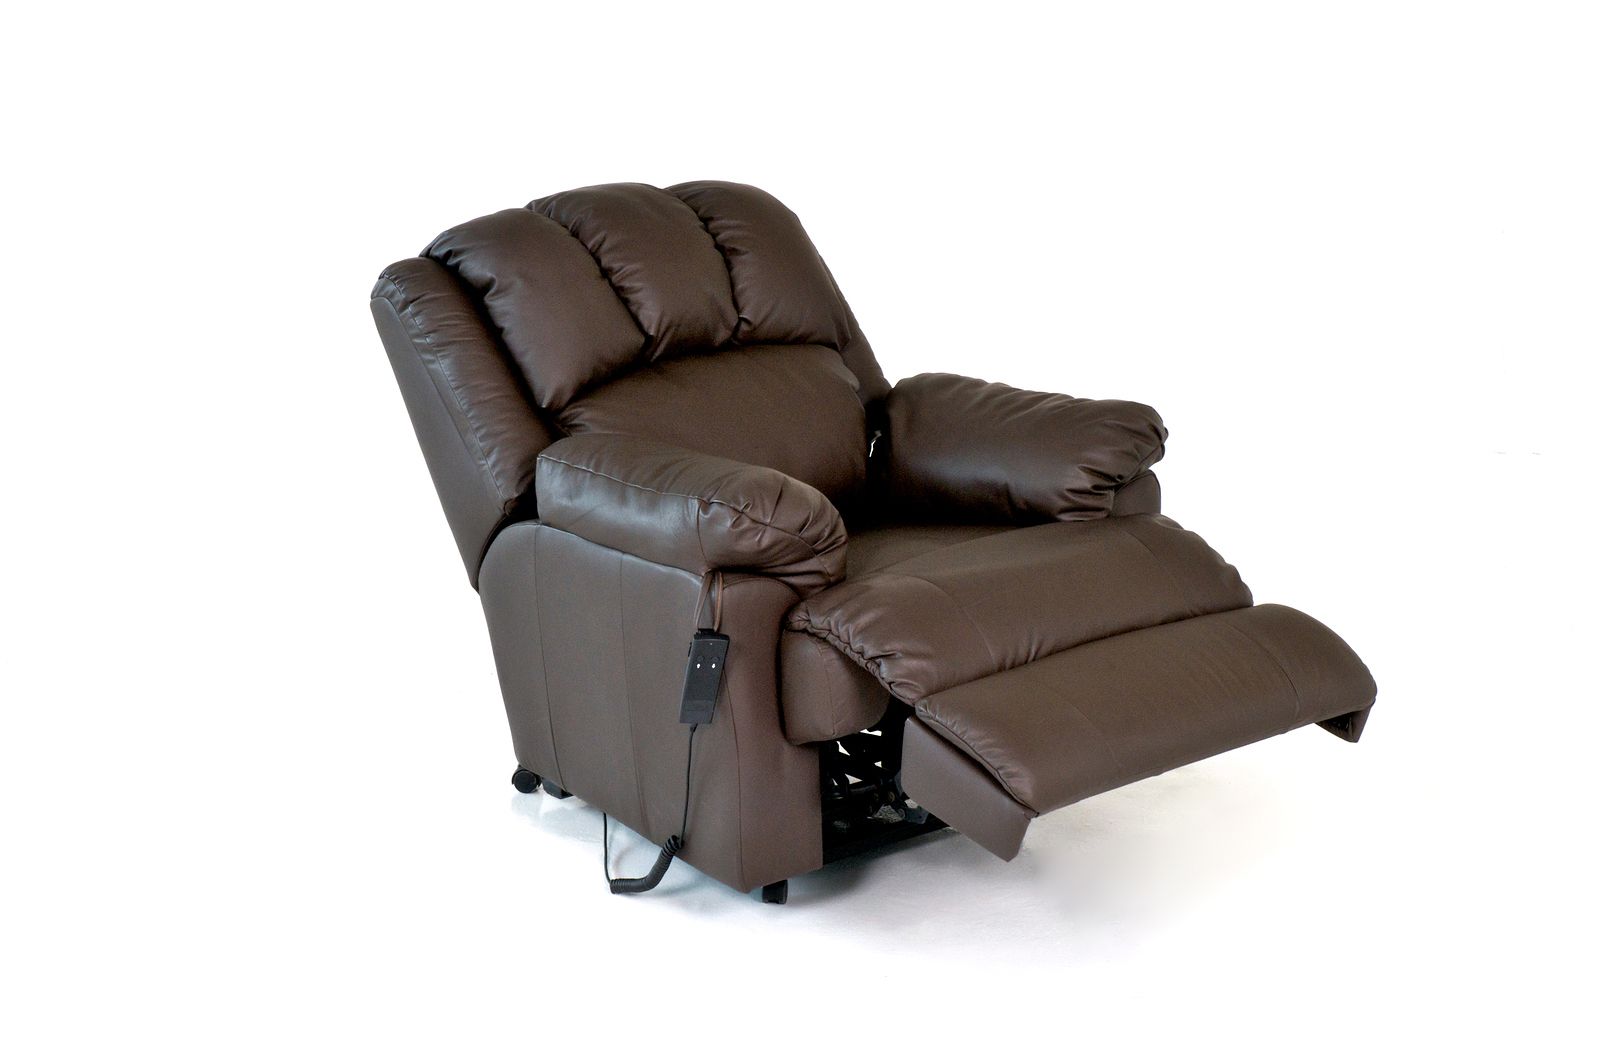 ¿Quieres comprar un sillón masajeador o relax? Pues atento a estos consejos